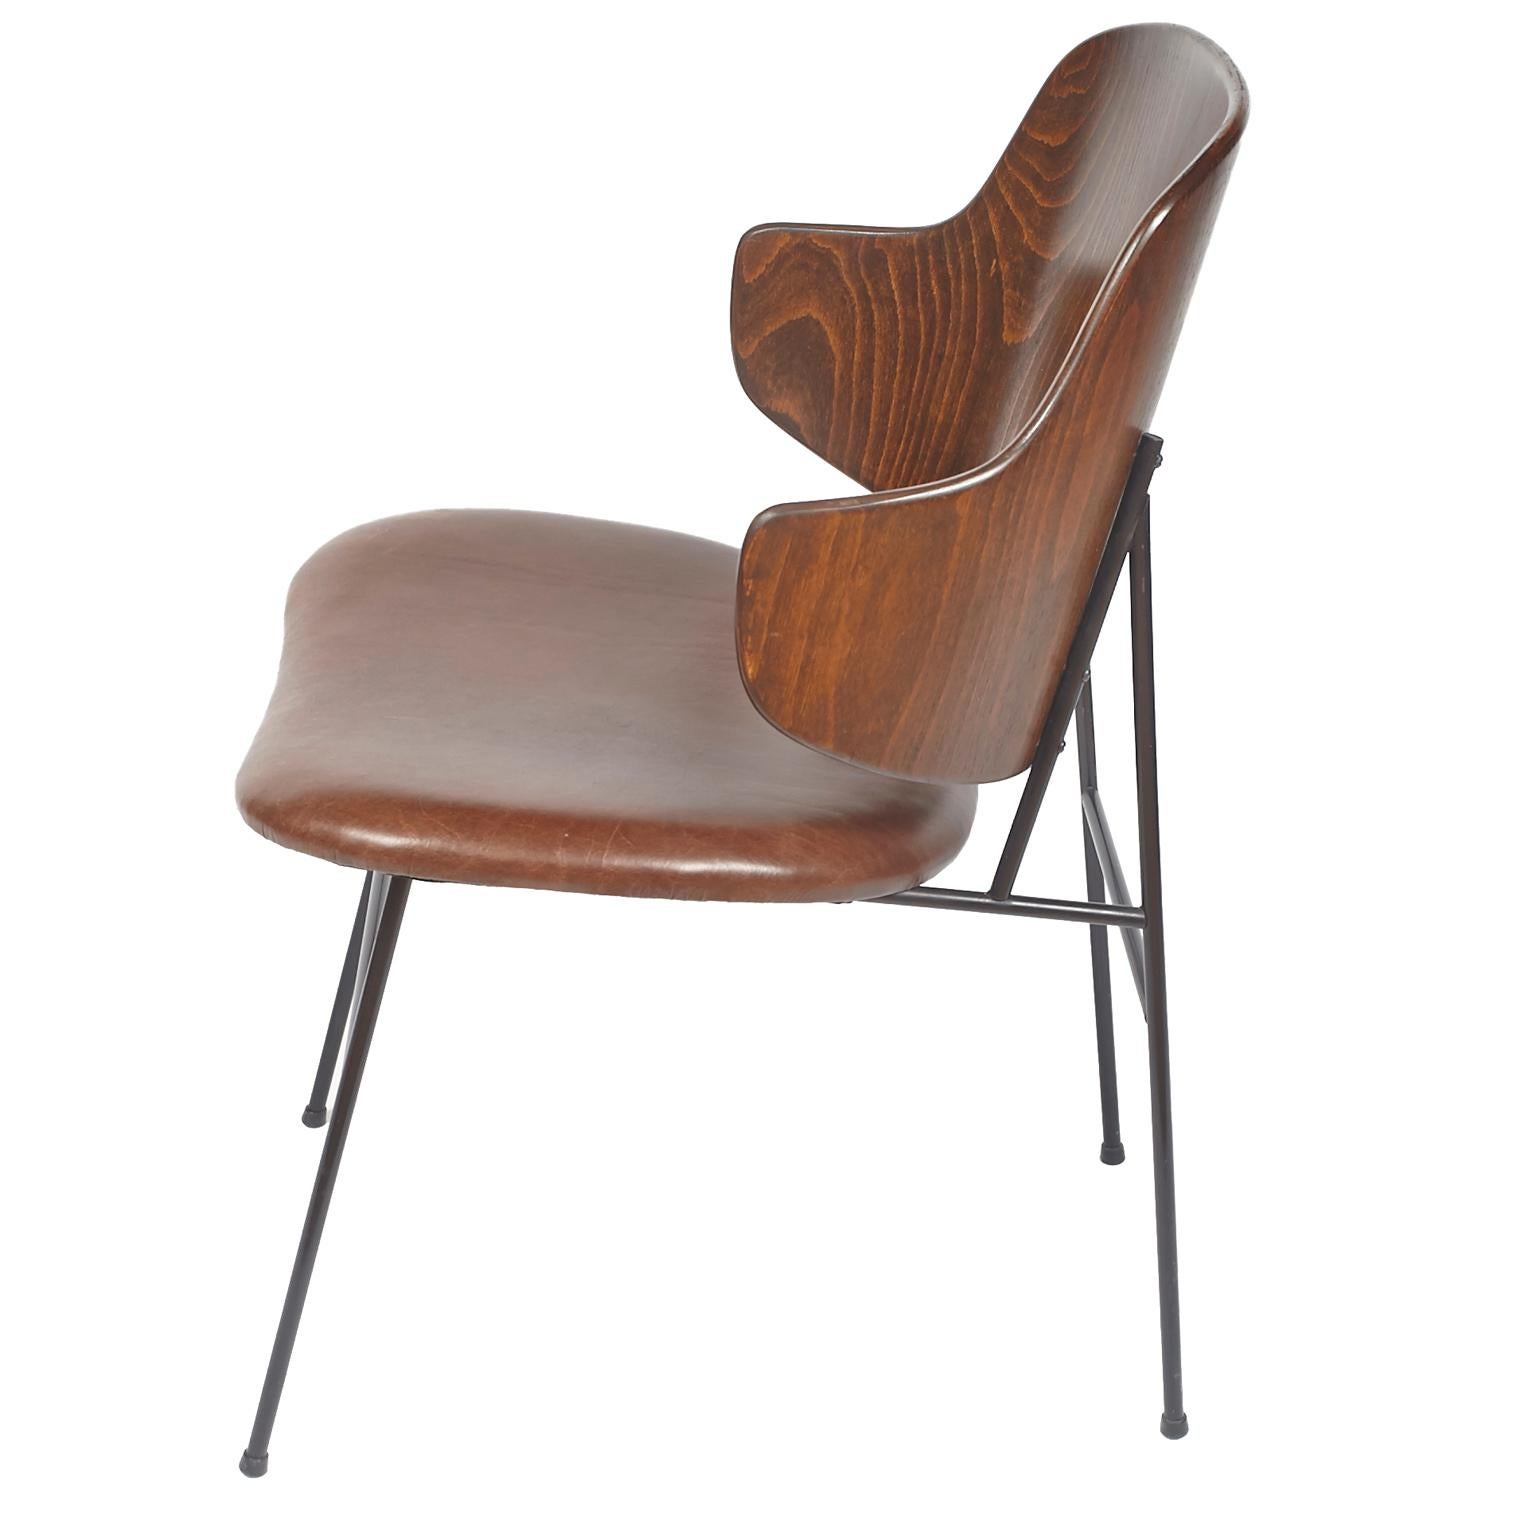 19th Century Ib Kofod-Larsen Mid-Century Modern Penguin Chair For Sale